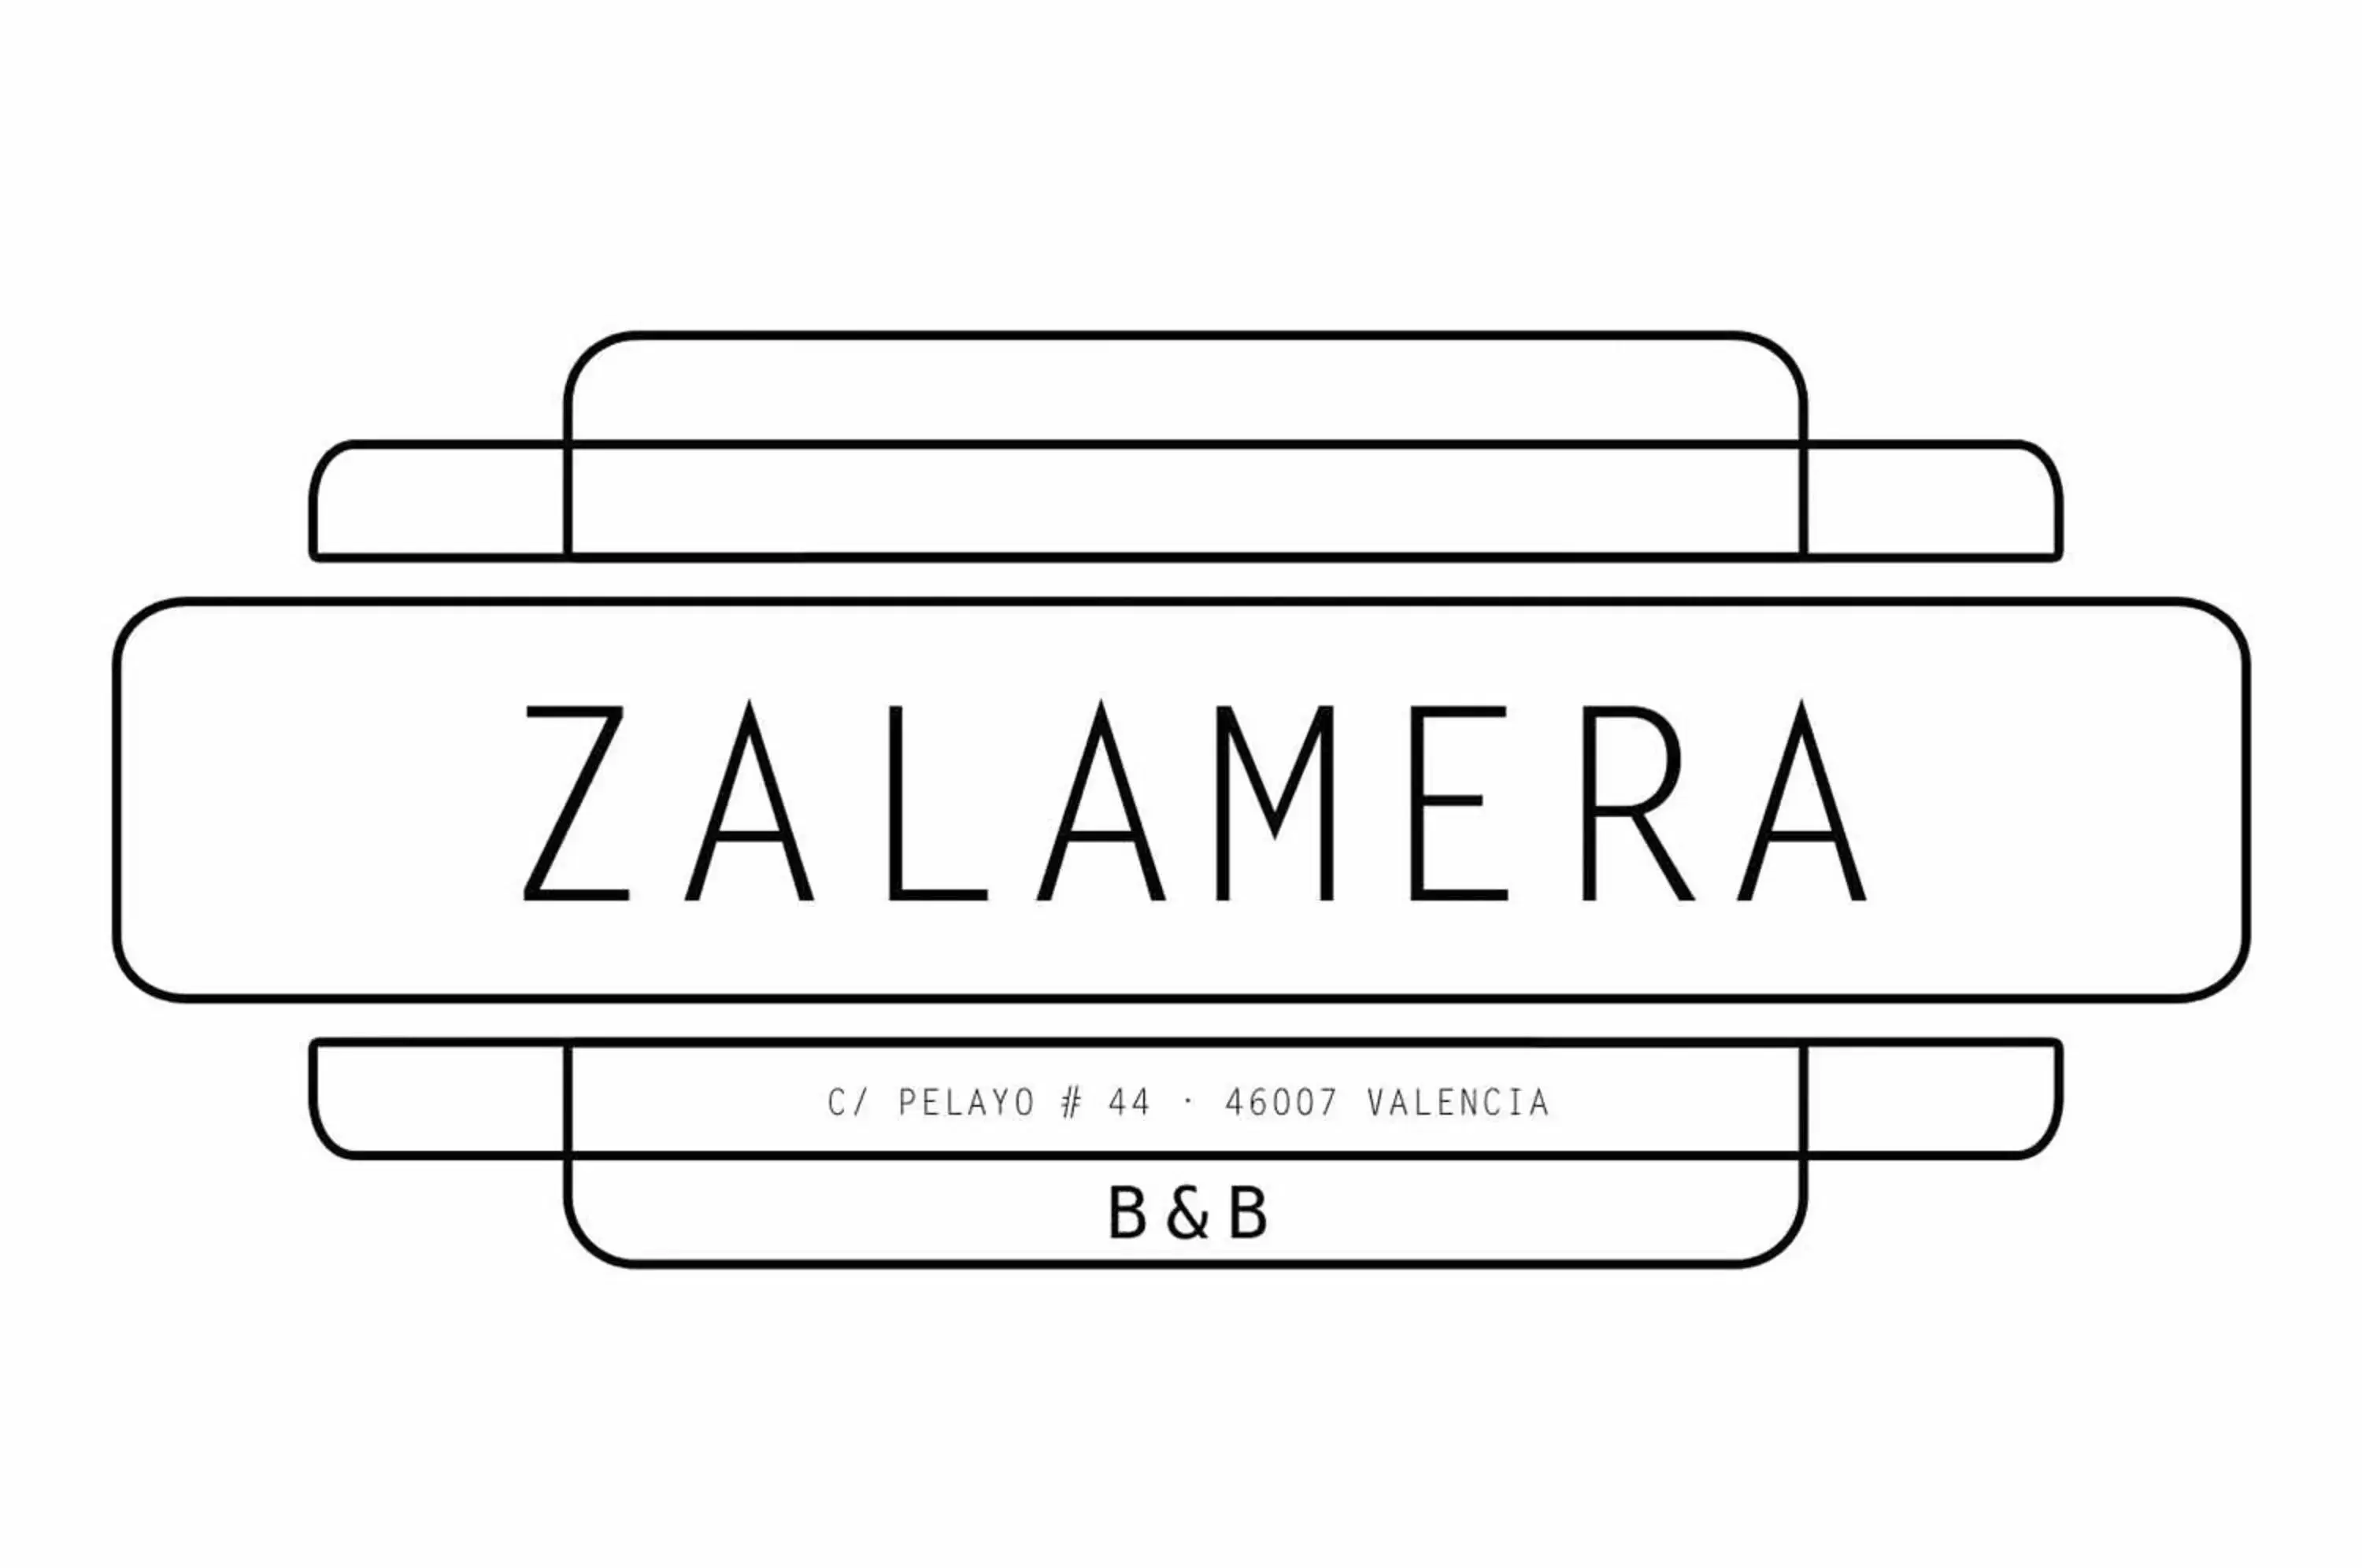 Property logo or sign in Zalamera BnB